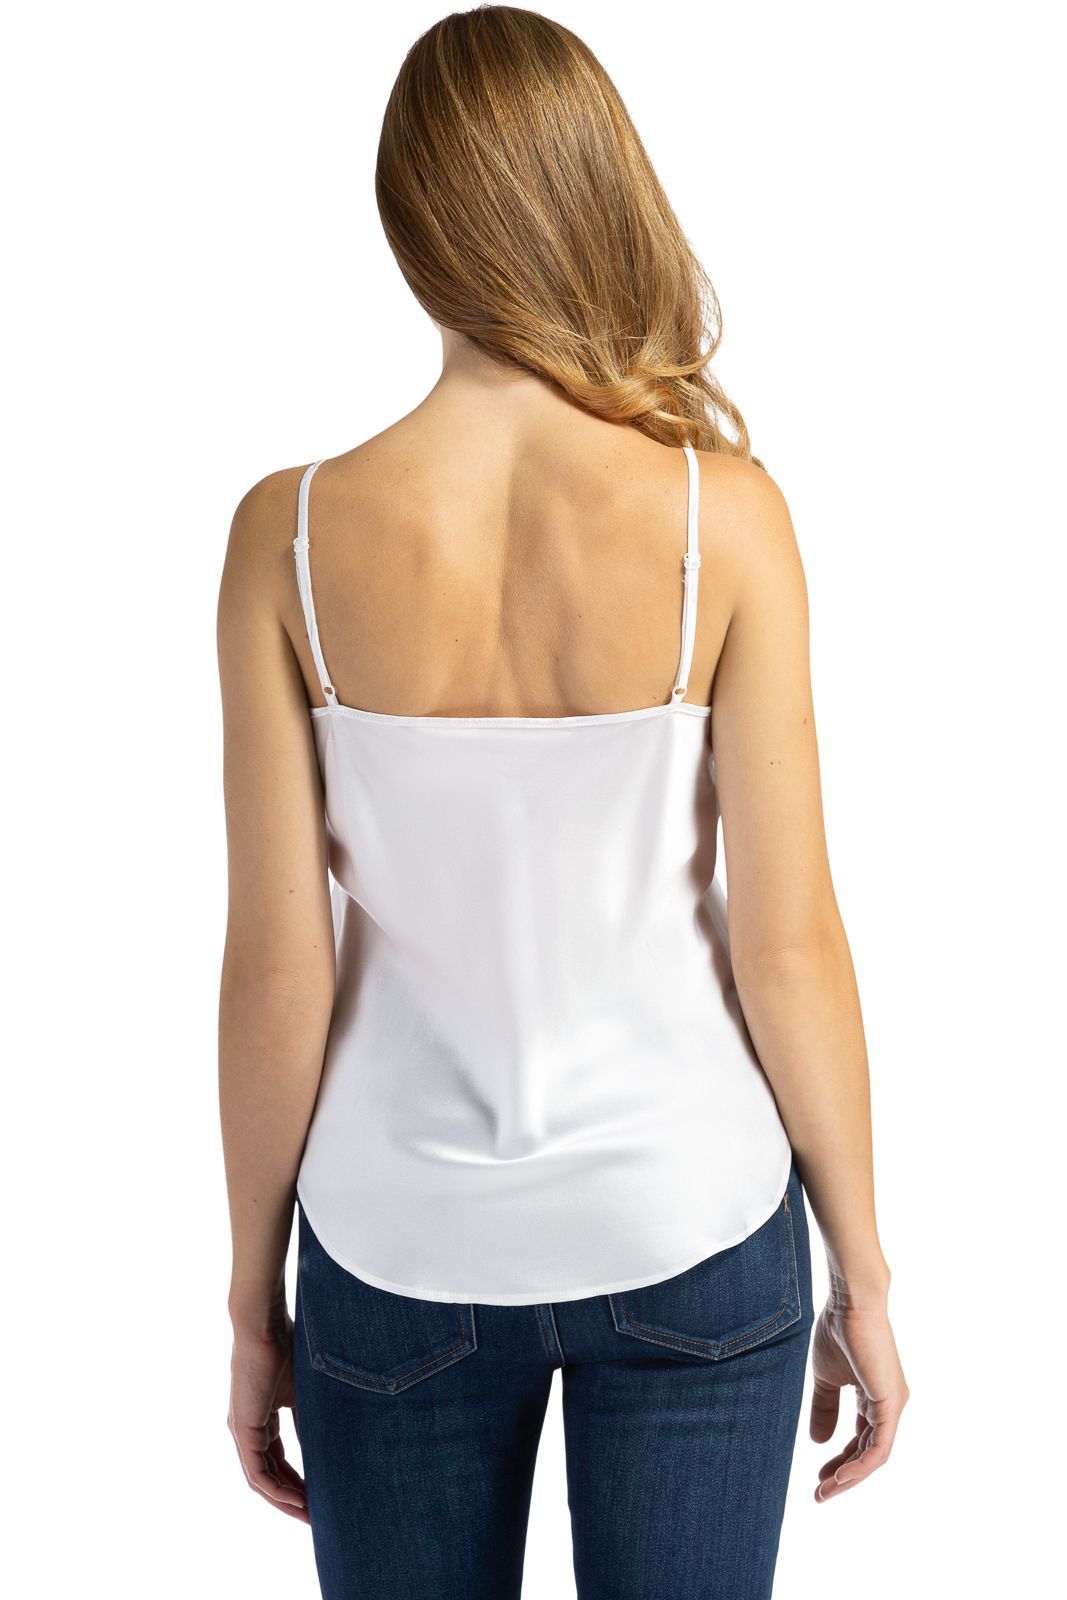 Women's camisole tank top with spaghetti straps stretch cotton white